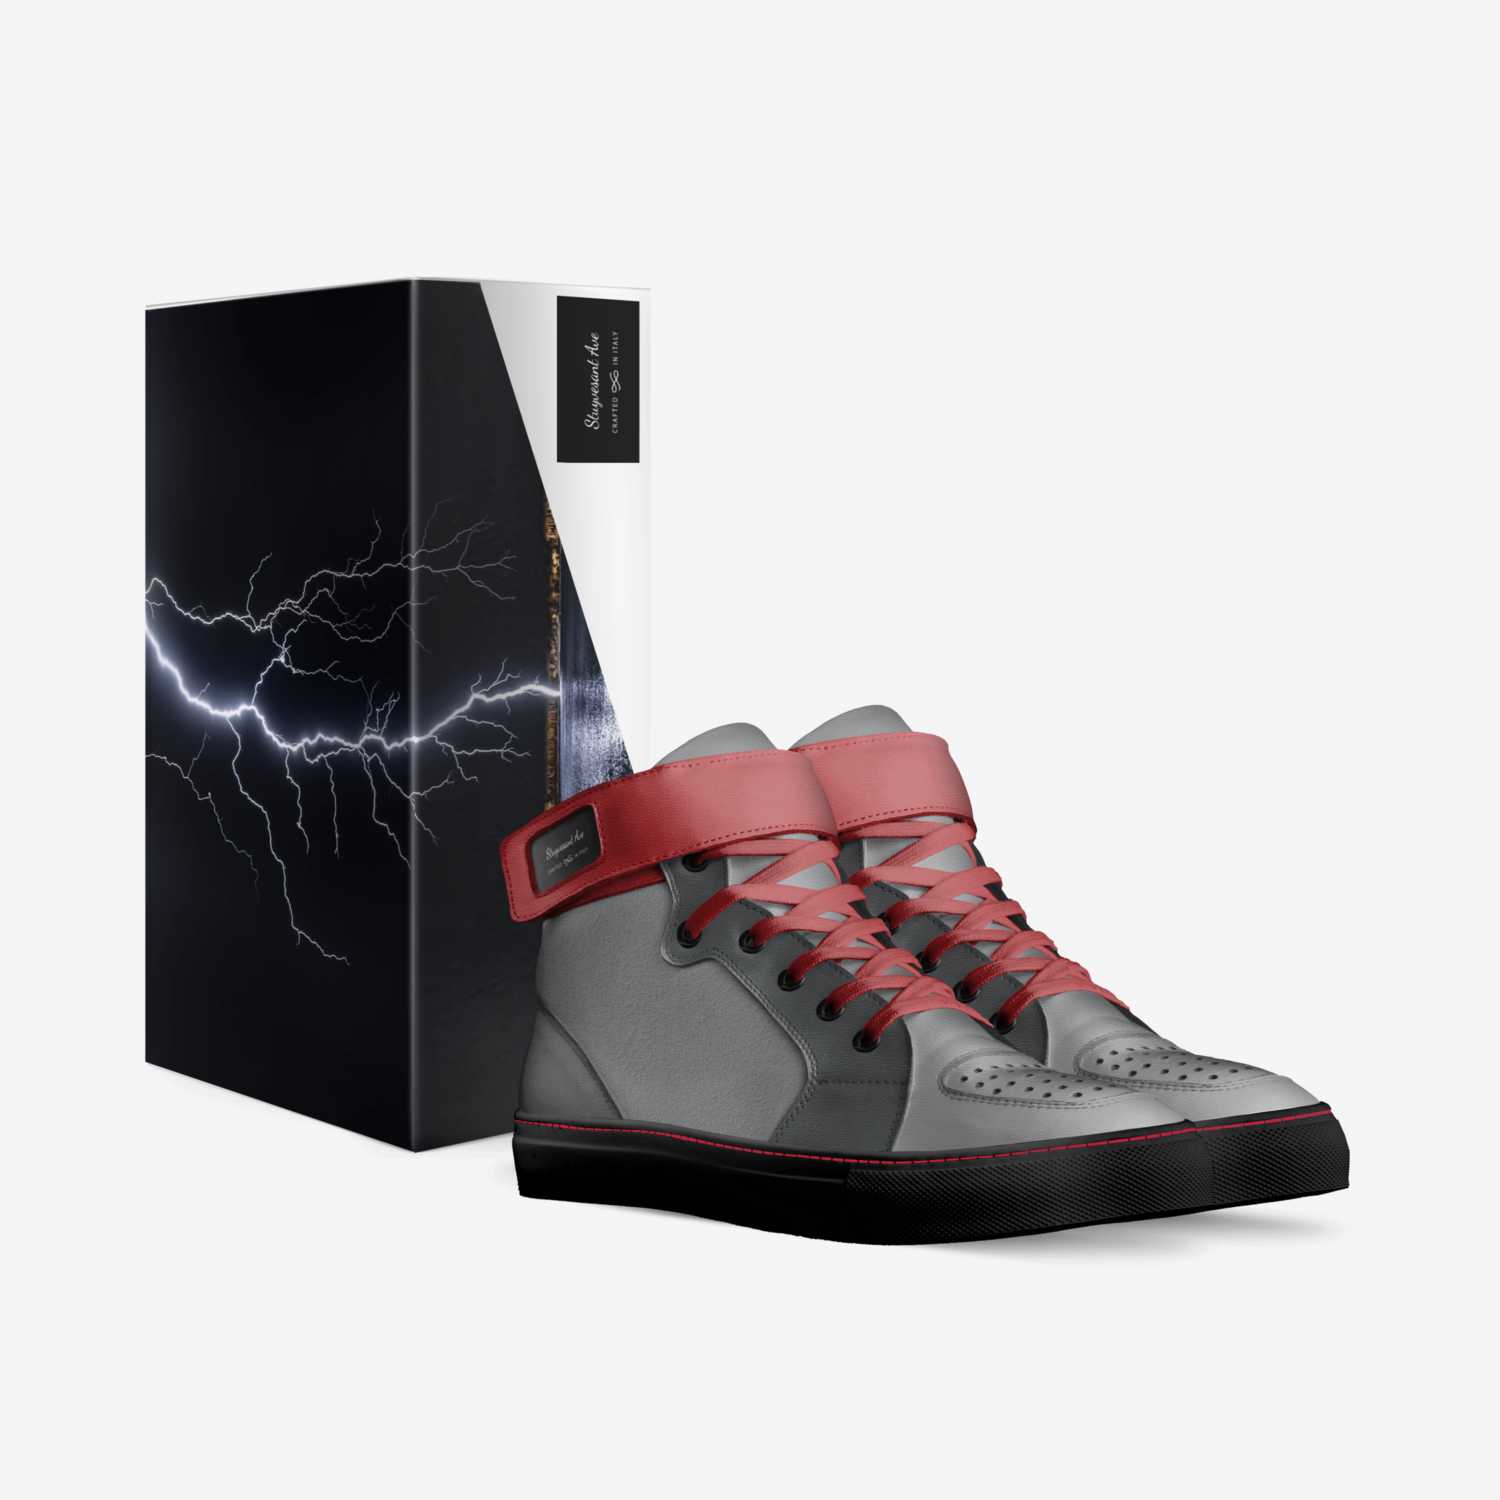 Stuyvesant Ave custom made in Italy shoes by Matt Hnyda | Box view